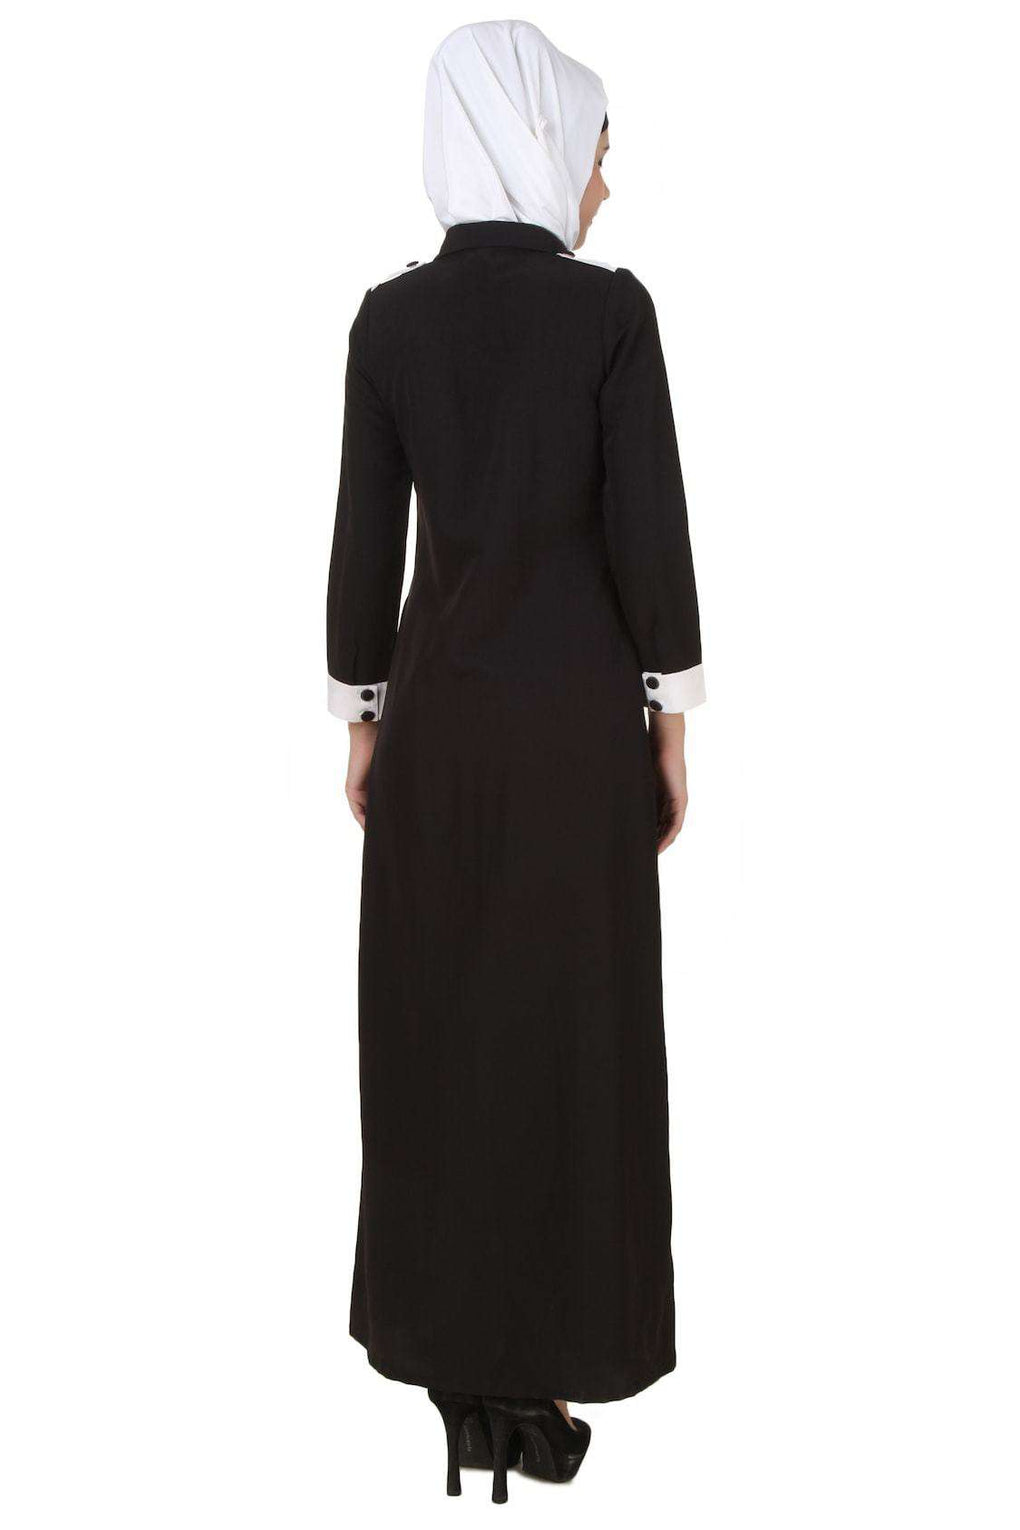 Naazneen Black & White Front Open Jilbab Back